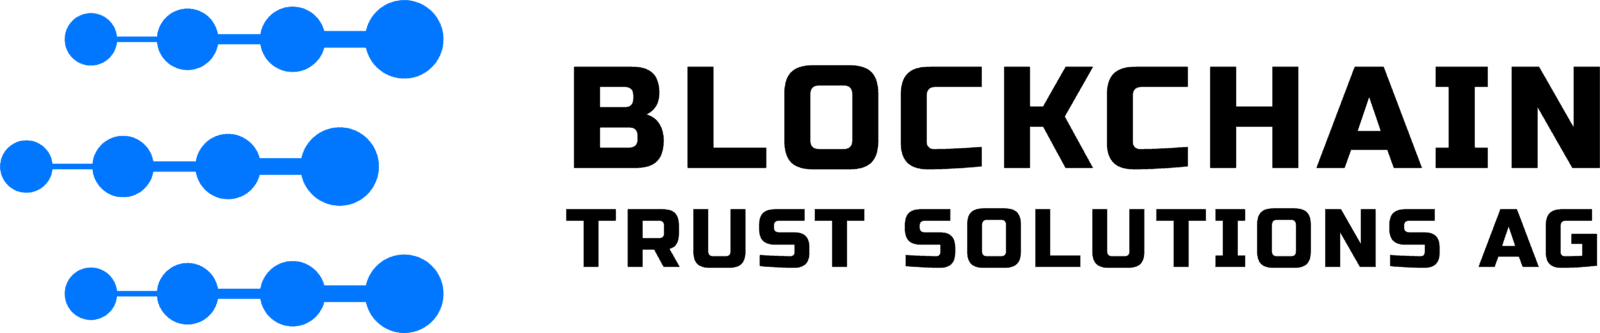 BlockchainTrustSolutions4vodafone banner